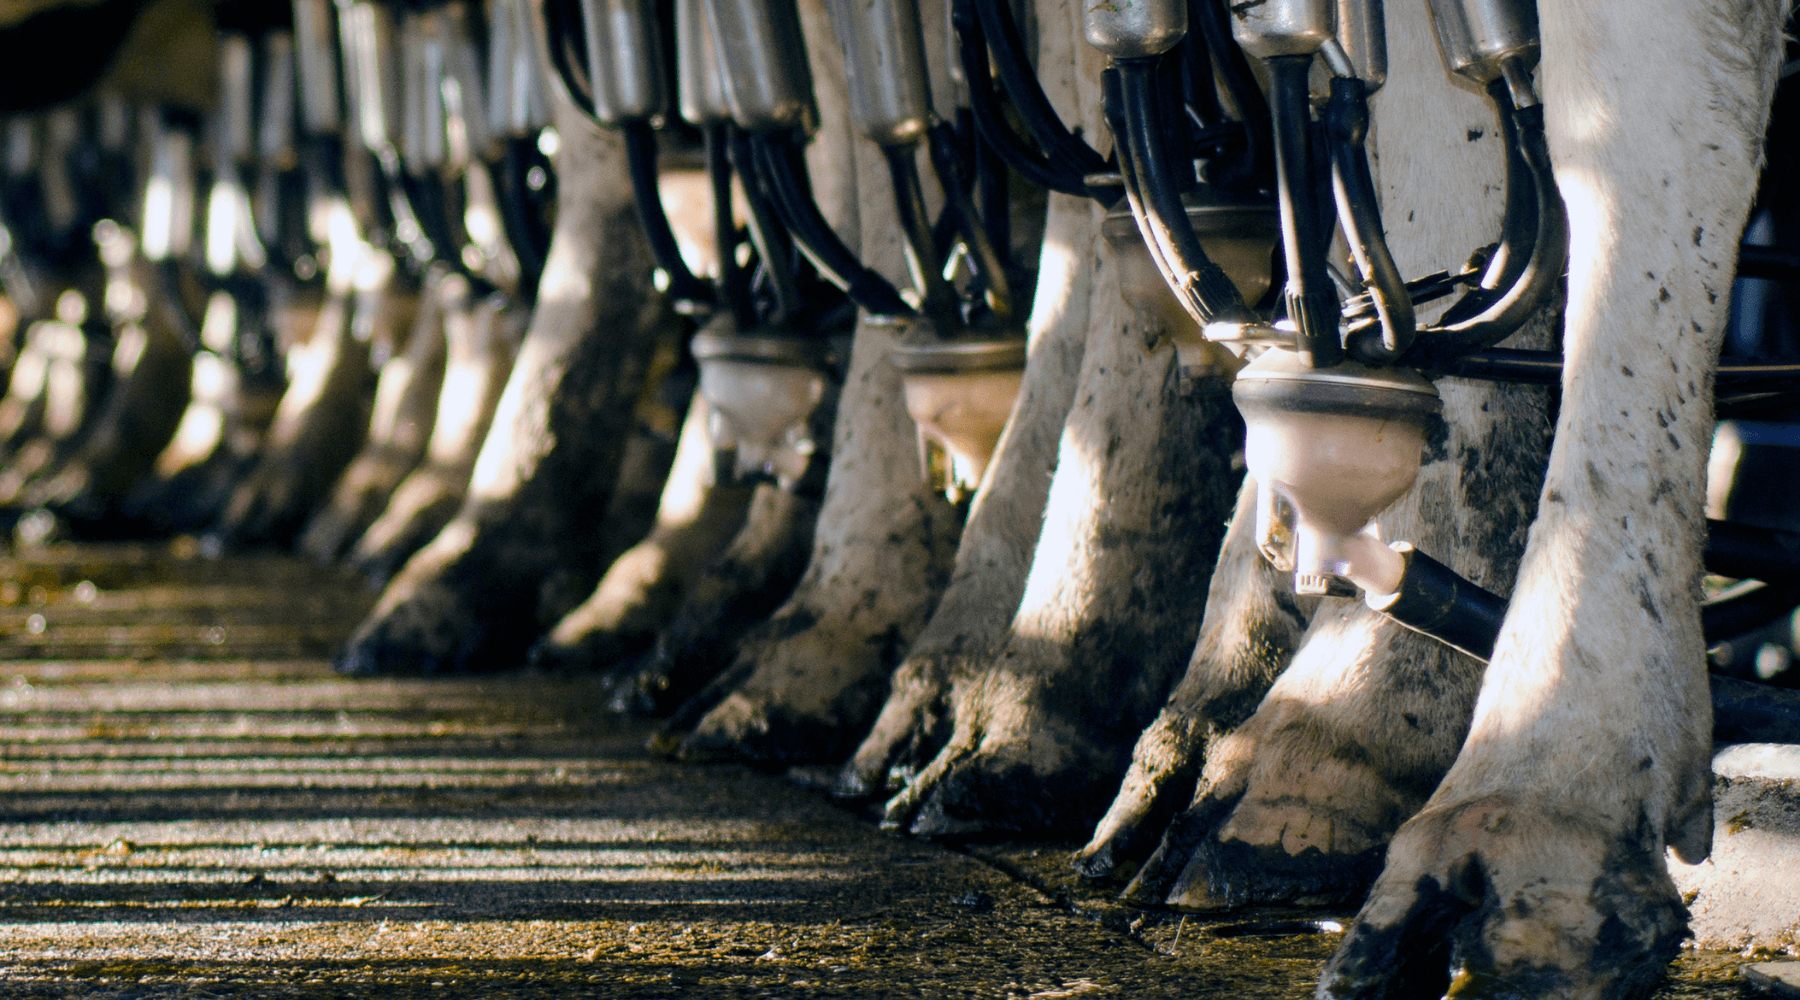 How the Dairy Industry Designs Misleading Studies